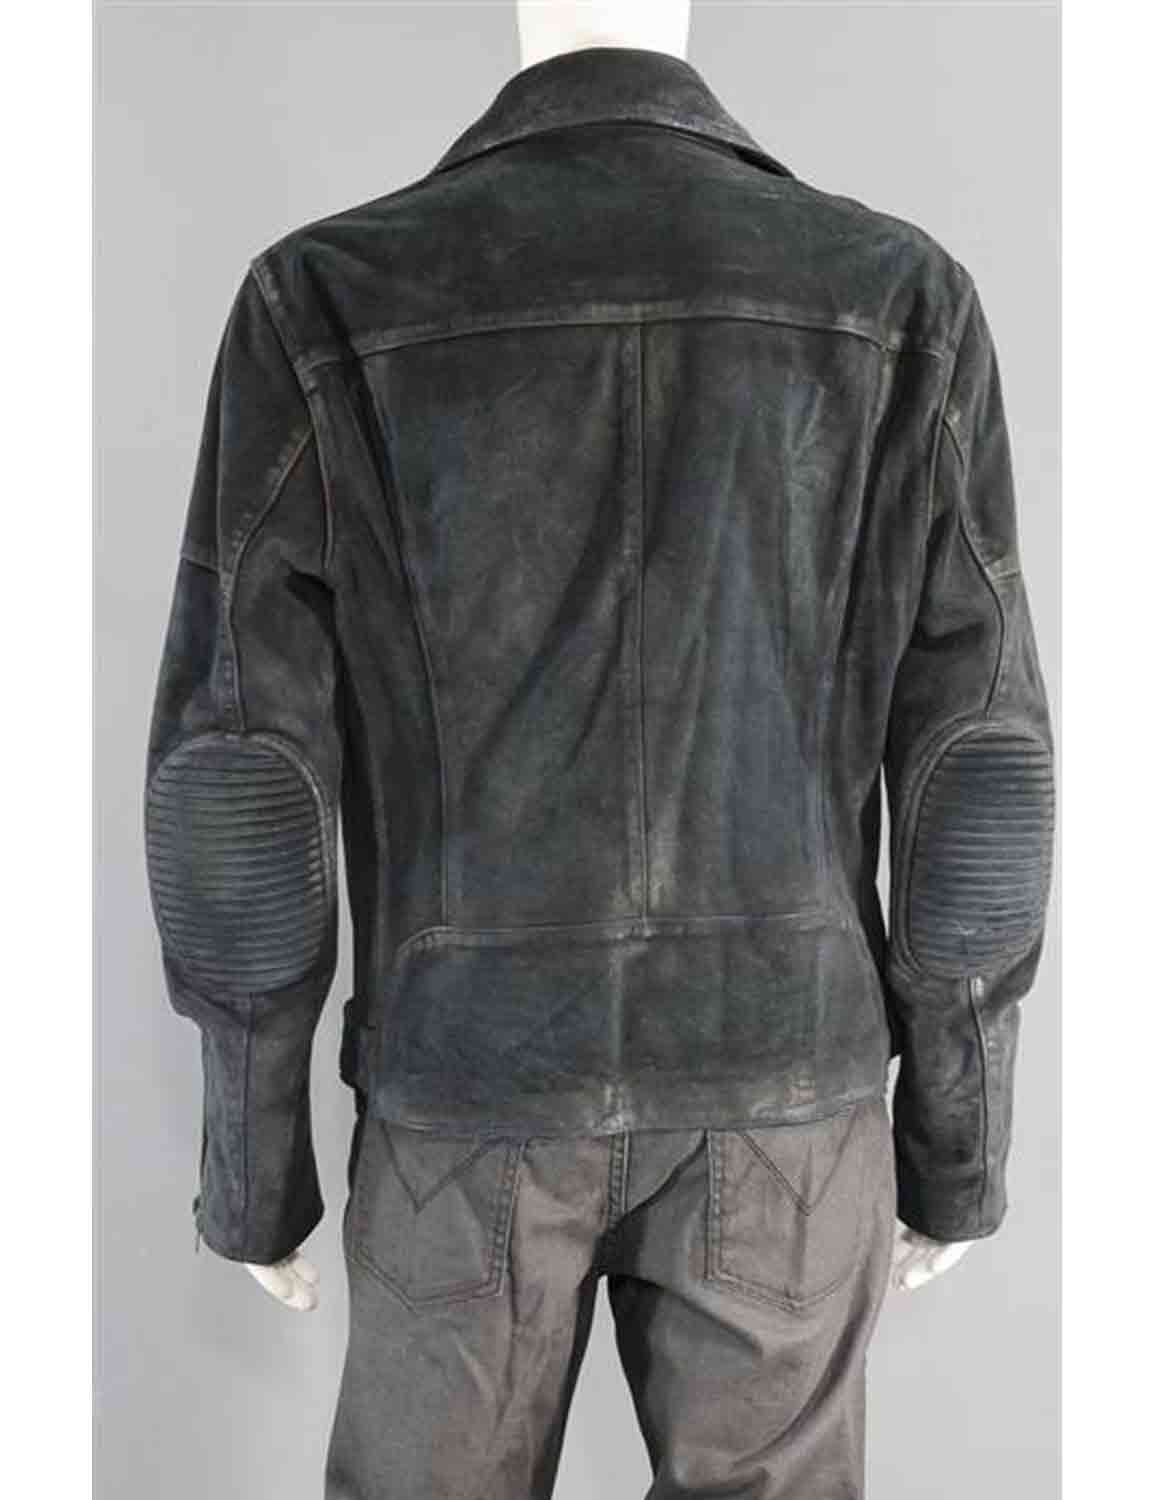 Jon Hamm Baby Driver Film Buddy Leather Jacket